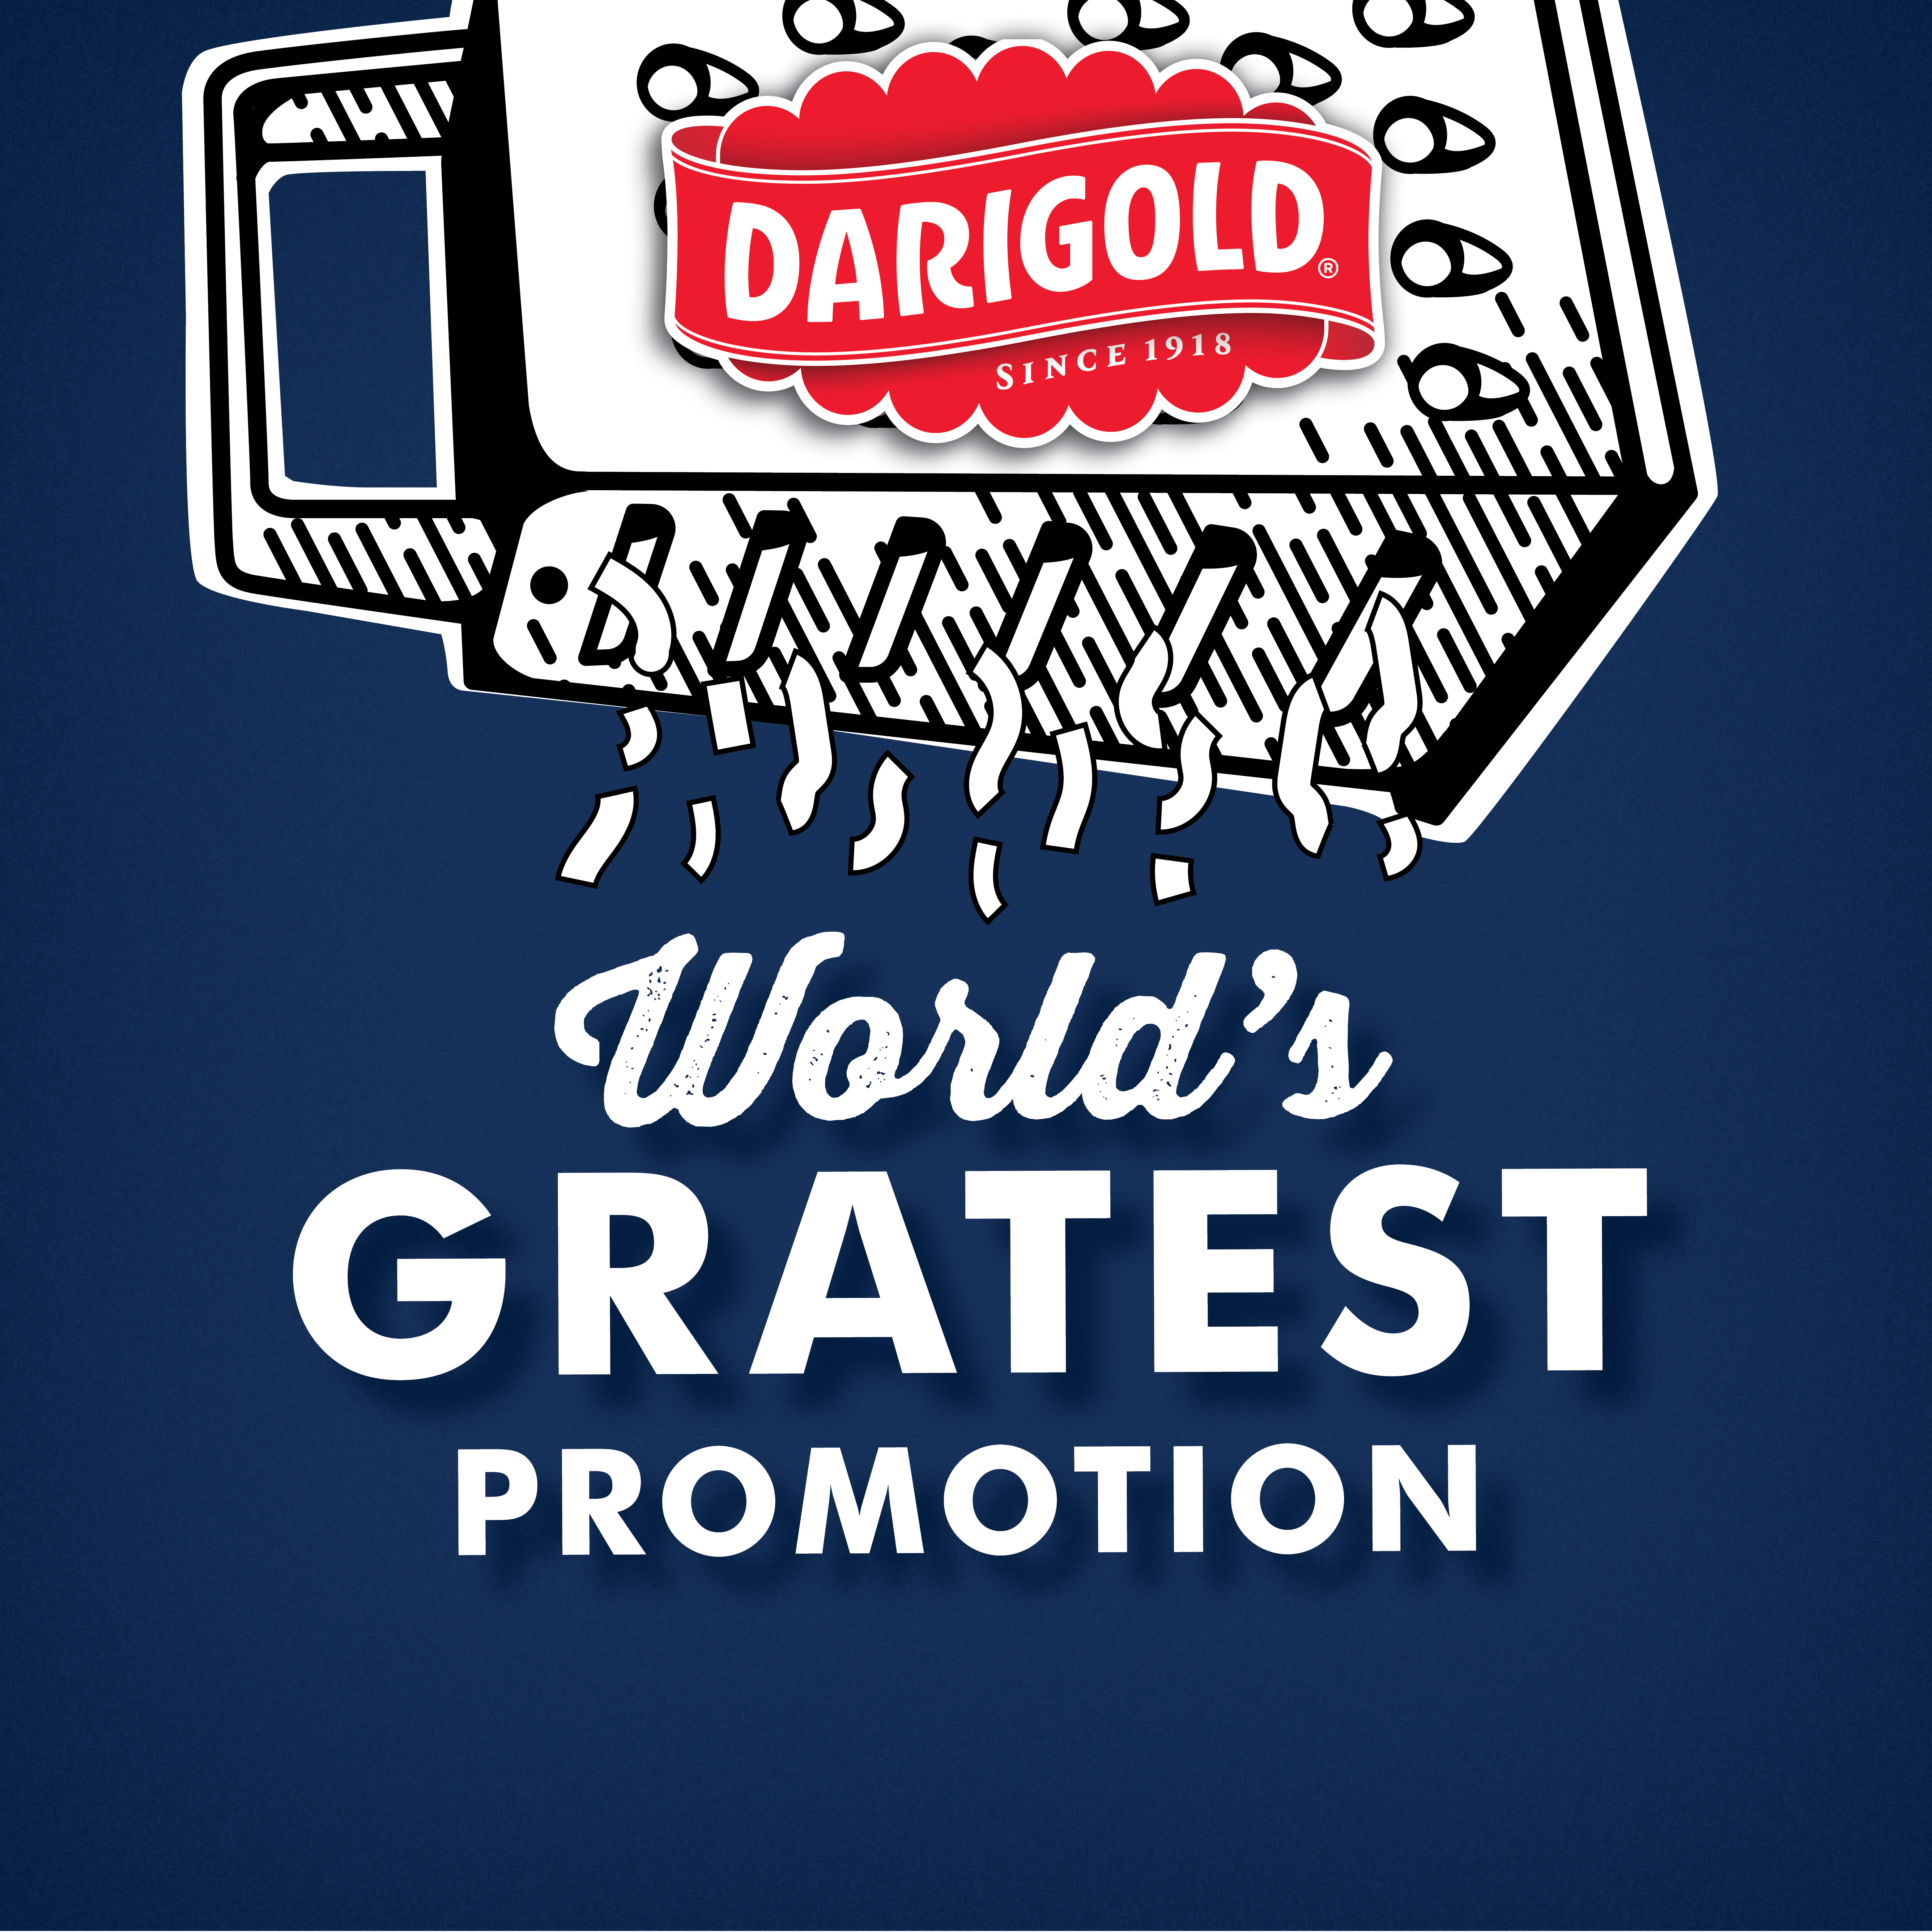 Darigold World’s Gratest Promotion